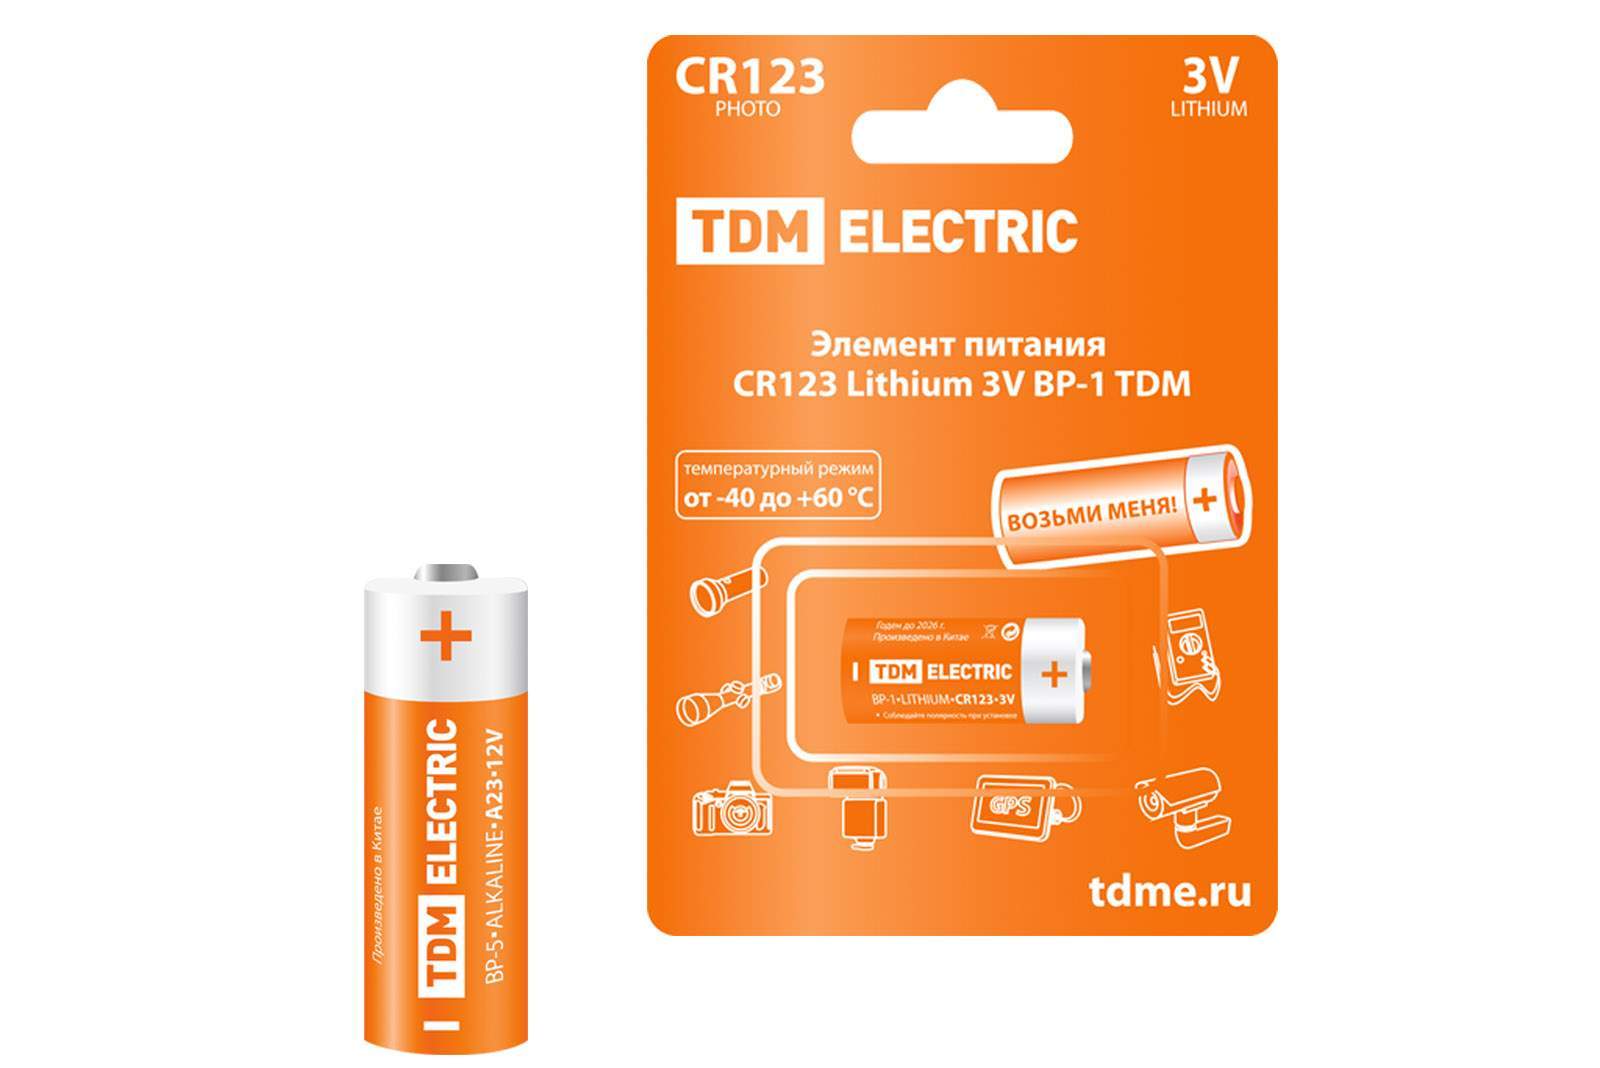 элемент питания cr123 lithium 3v bp-1 tdm от BTSprom.by